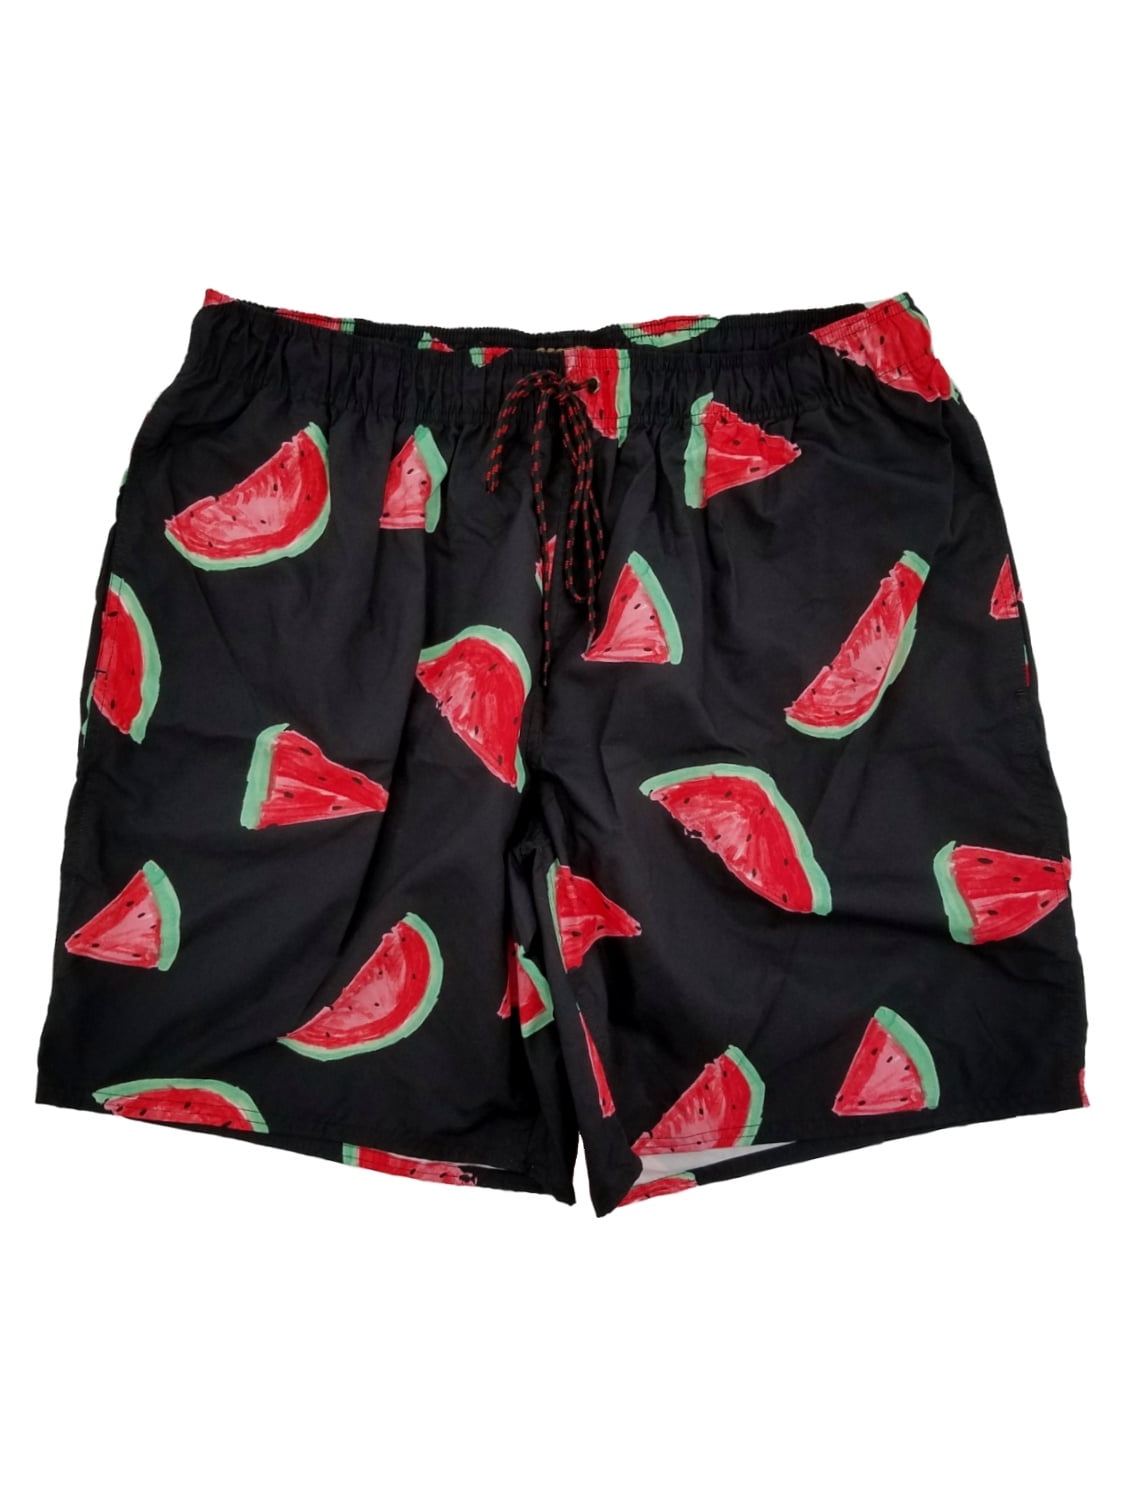 Shark Watermelon Funny Mens Quick Dry Beach Shorts Casual Shorts Breathable Swim Trunks Board Shorts Pants